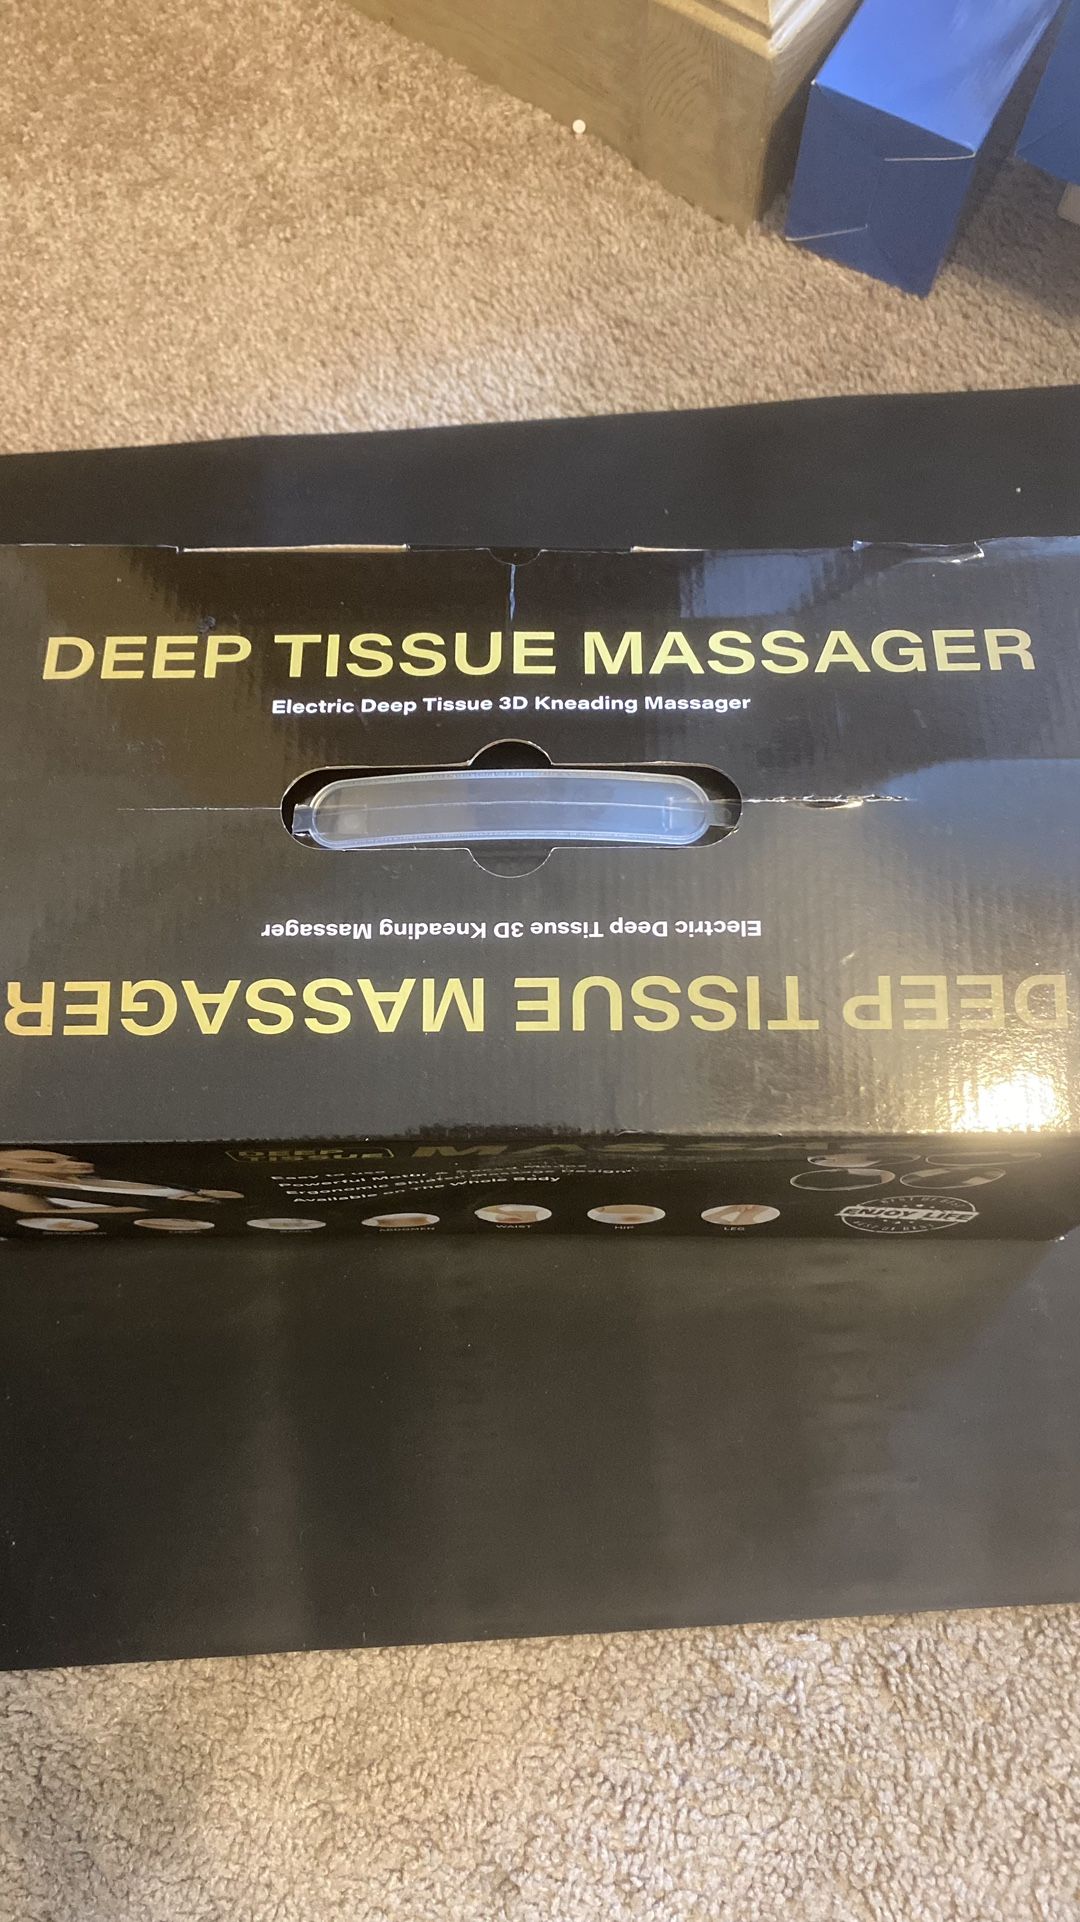 Brand new Heated Deep Tissue Massager $35